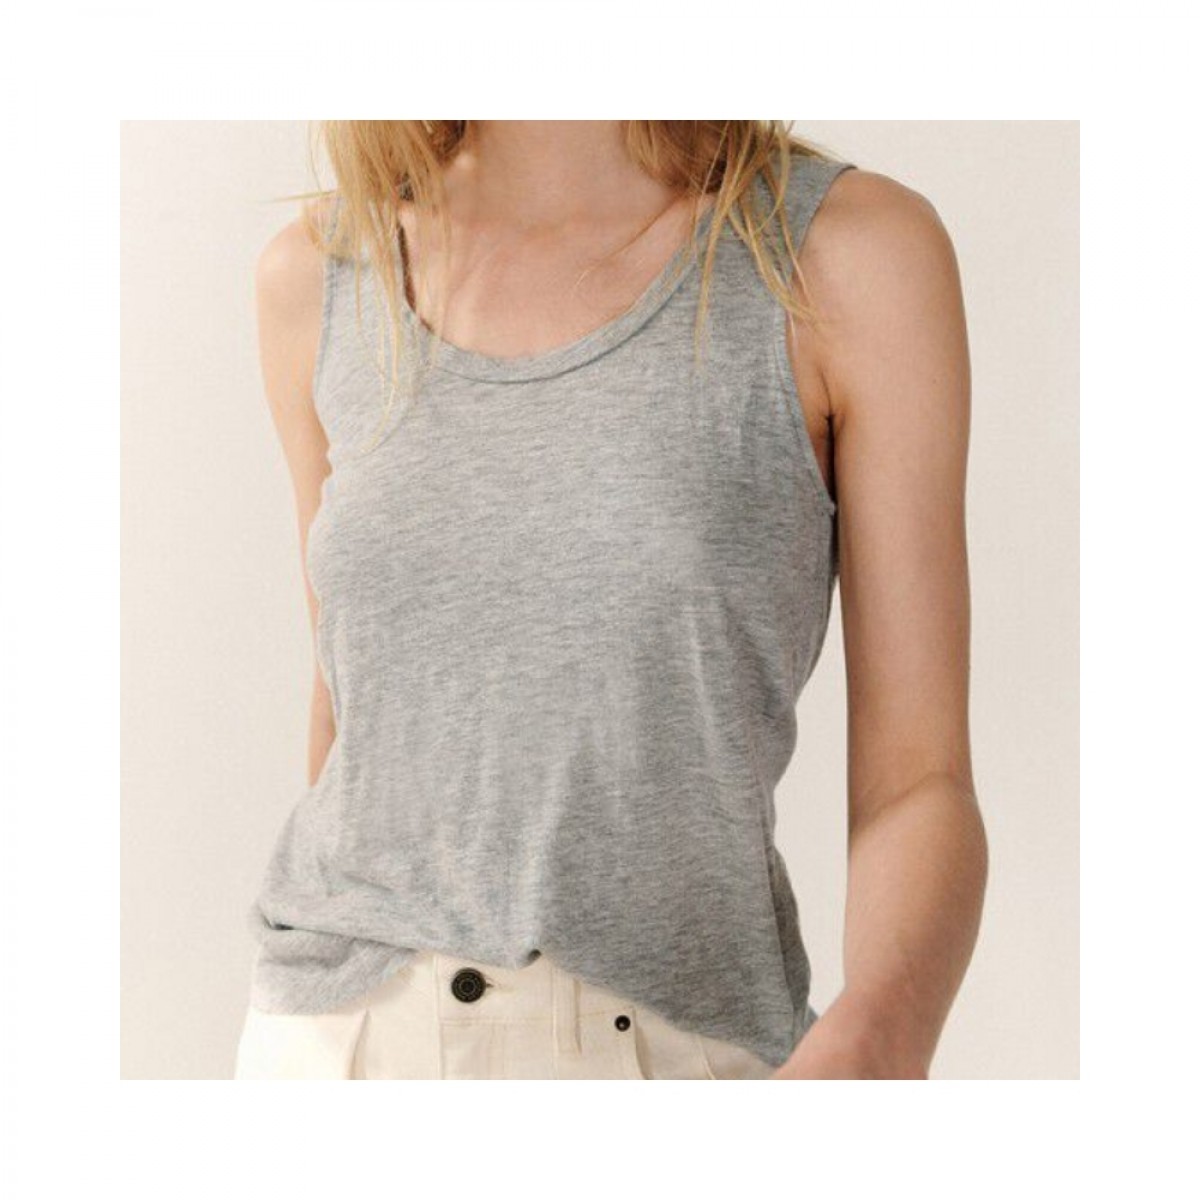 jacksonville strop t-shirt - heather grey - model front